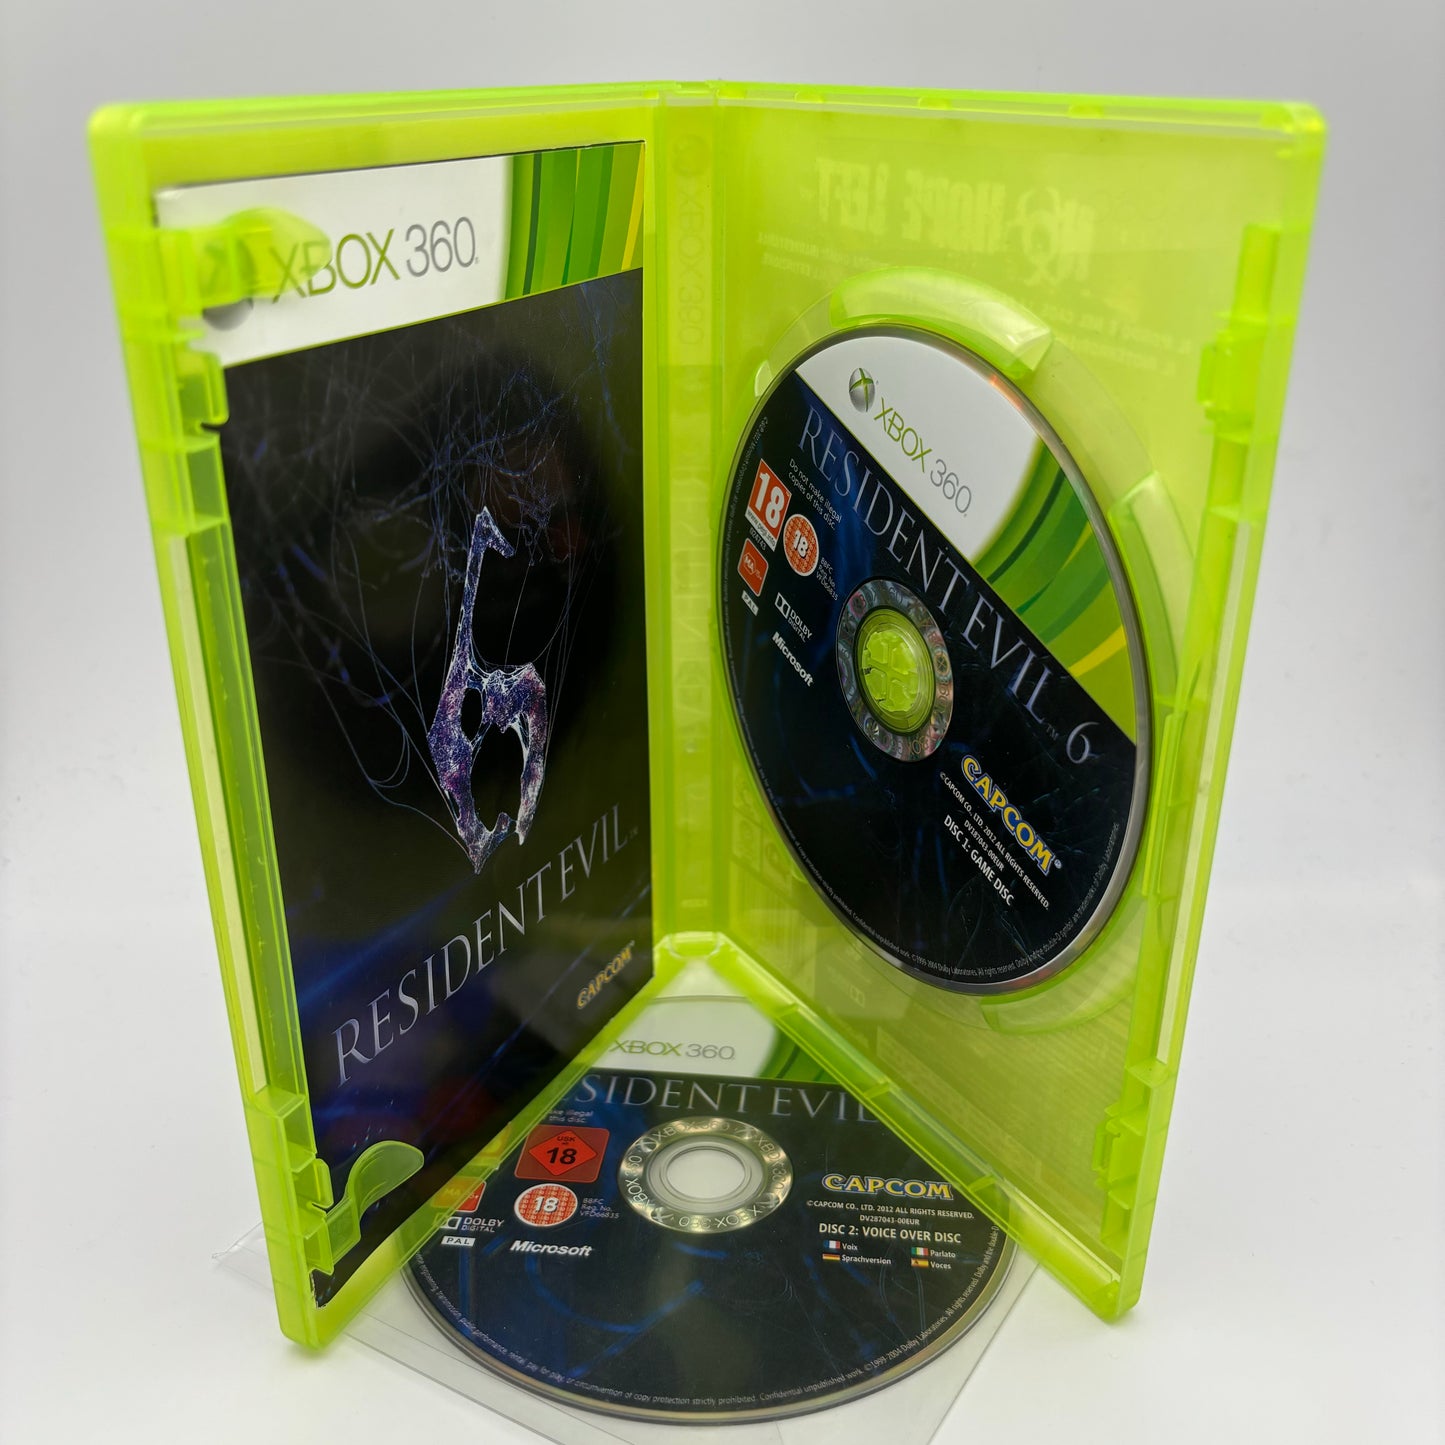 Resident Evil 6 Xbox 360 Pal Ita (USATO)